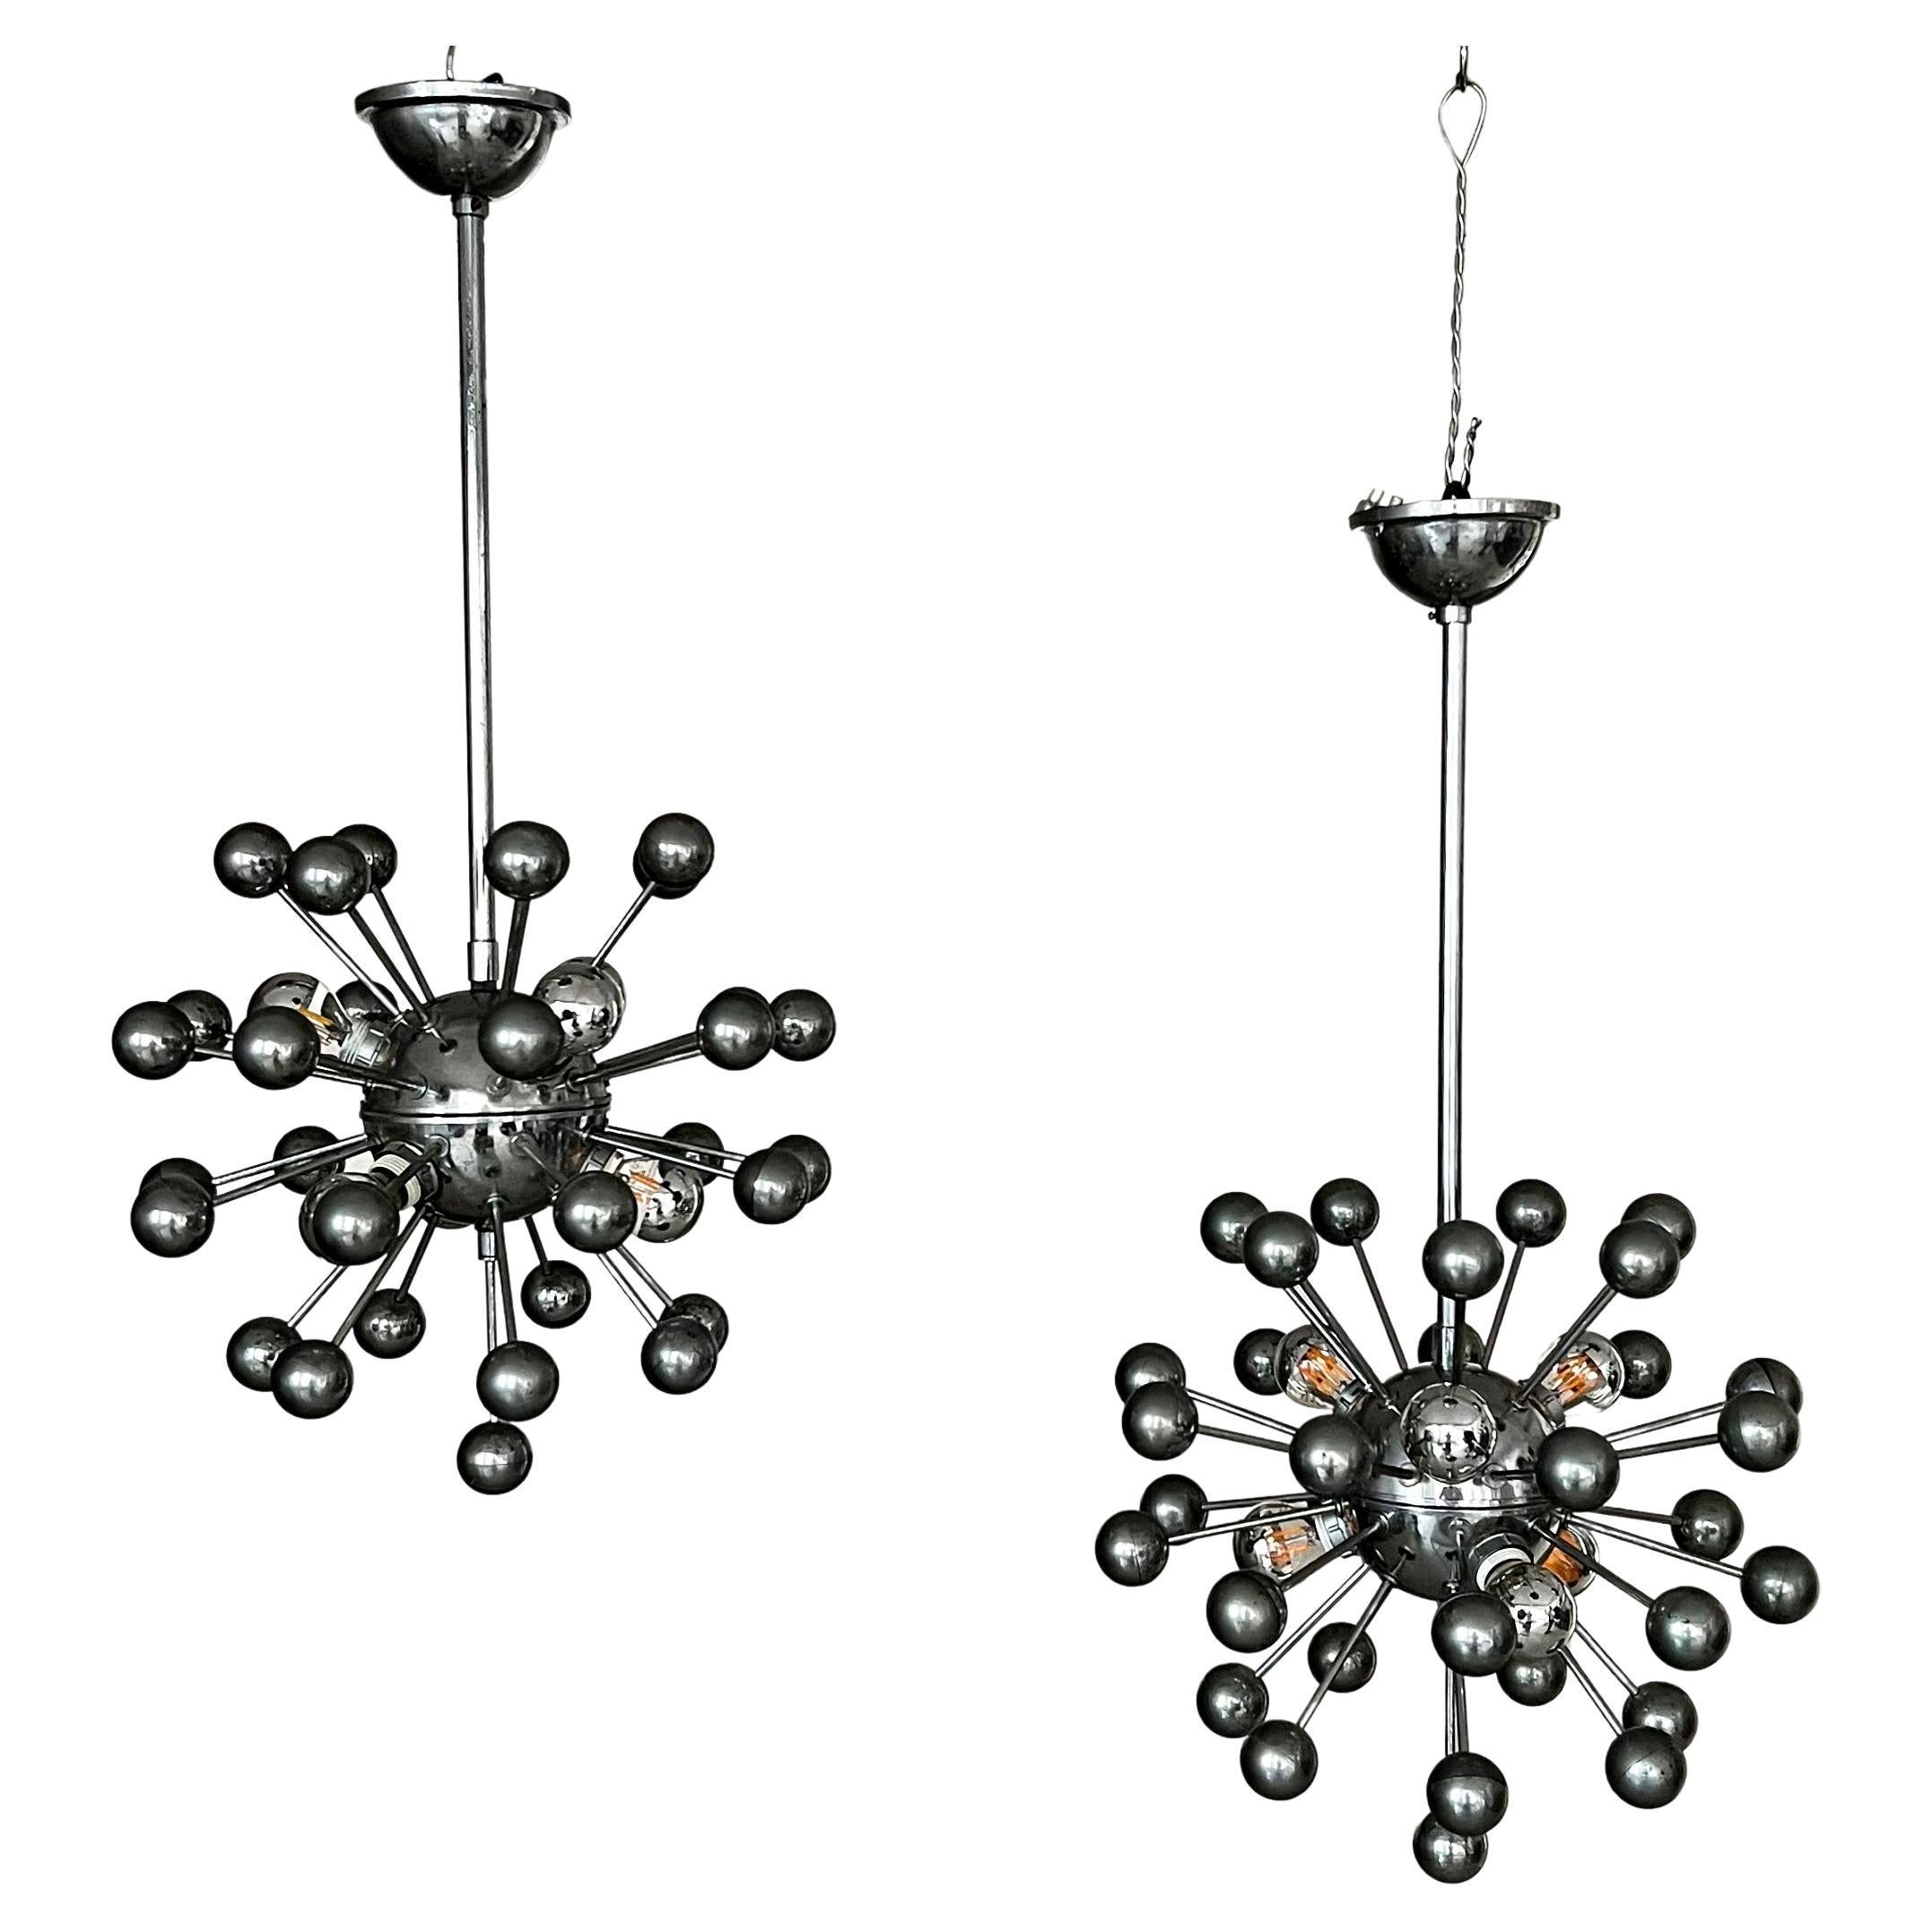 Chromed "Sputnik" Space Age Pendant Lamps, 1960s Italian Decorative  Chandelier For Sale at 1stDibs